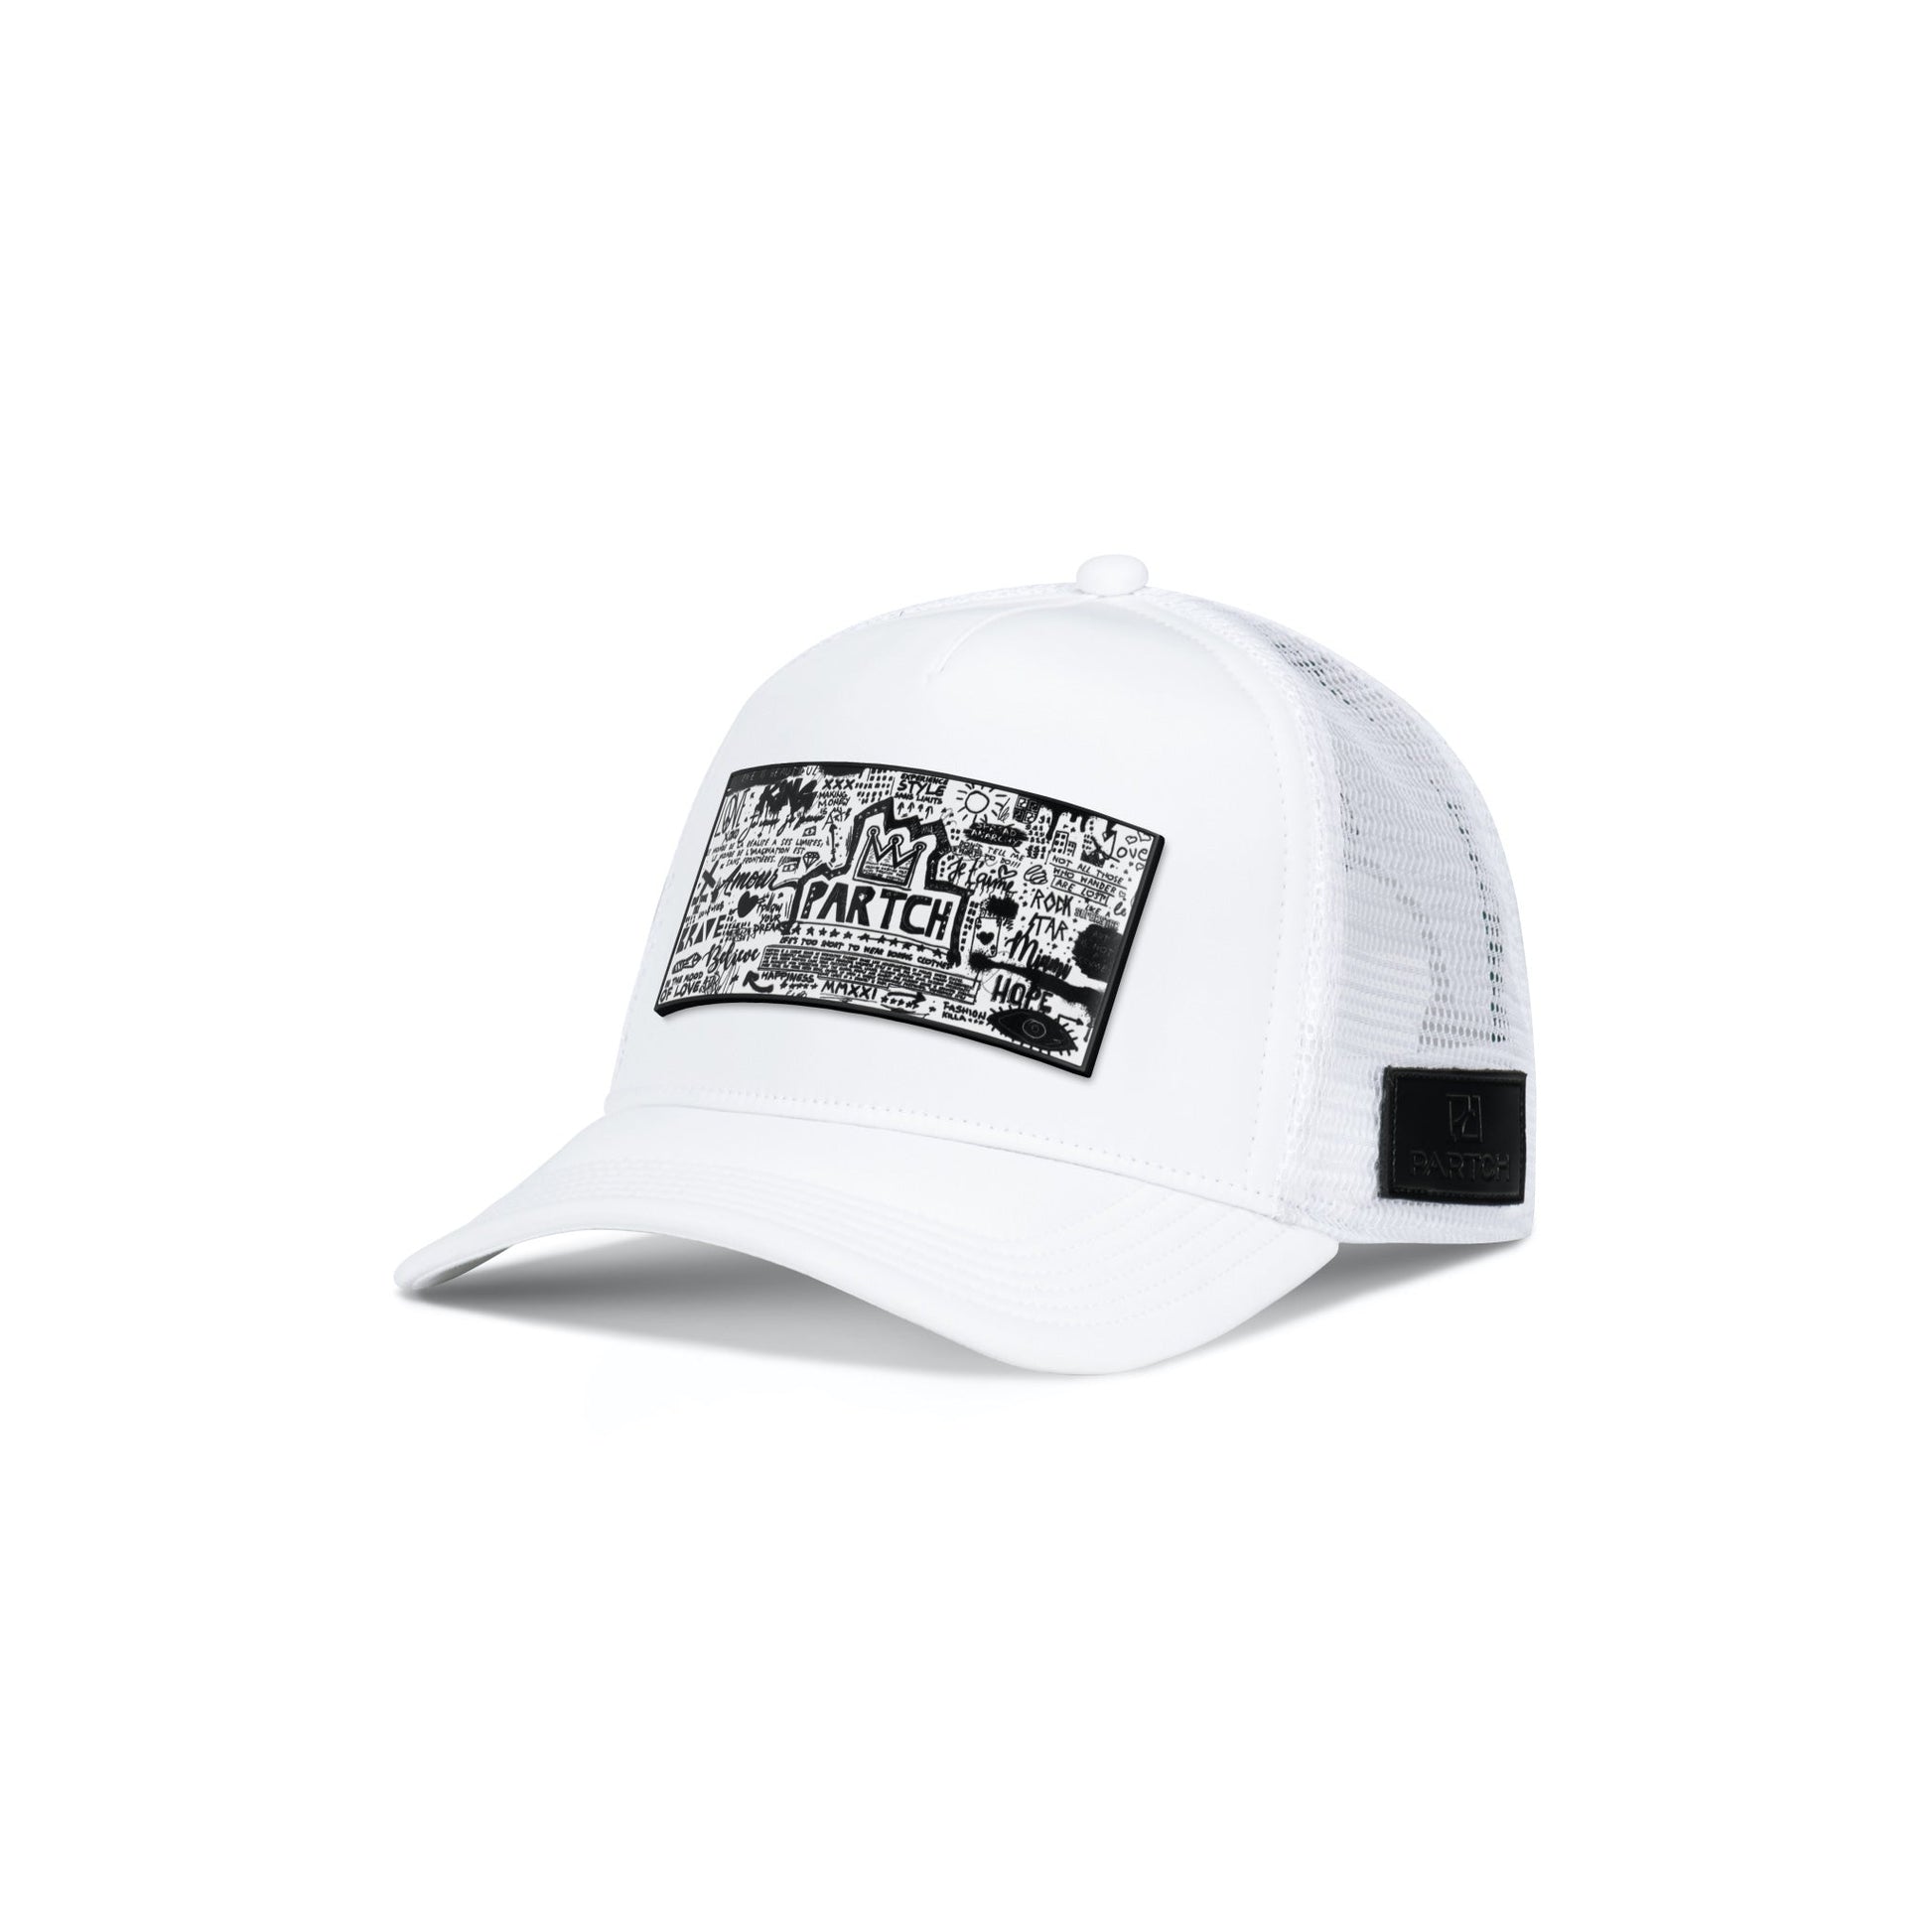 Partch Trucker Hat White with PARTCH-Clip Pop Love Front View